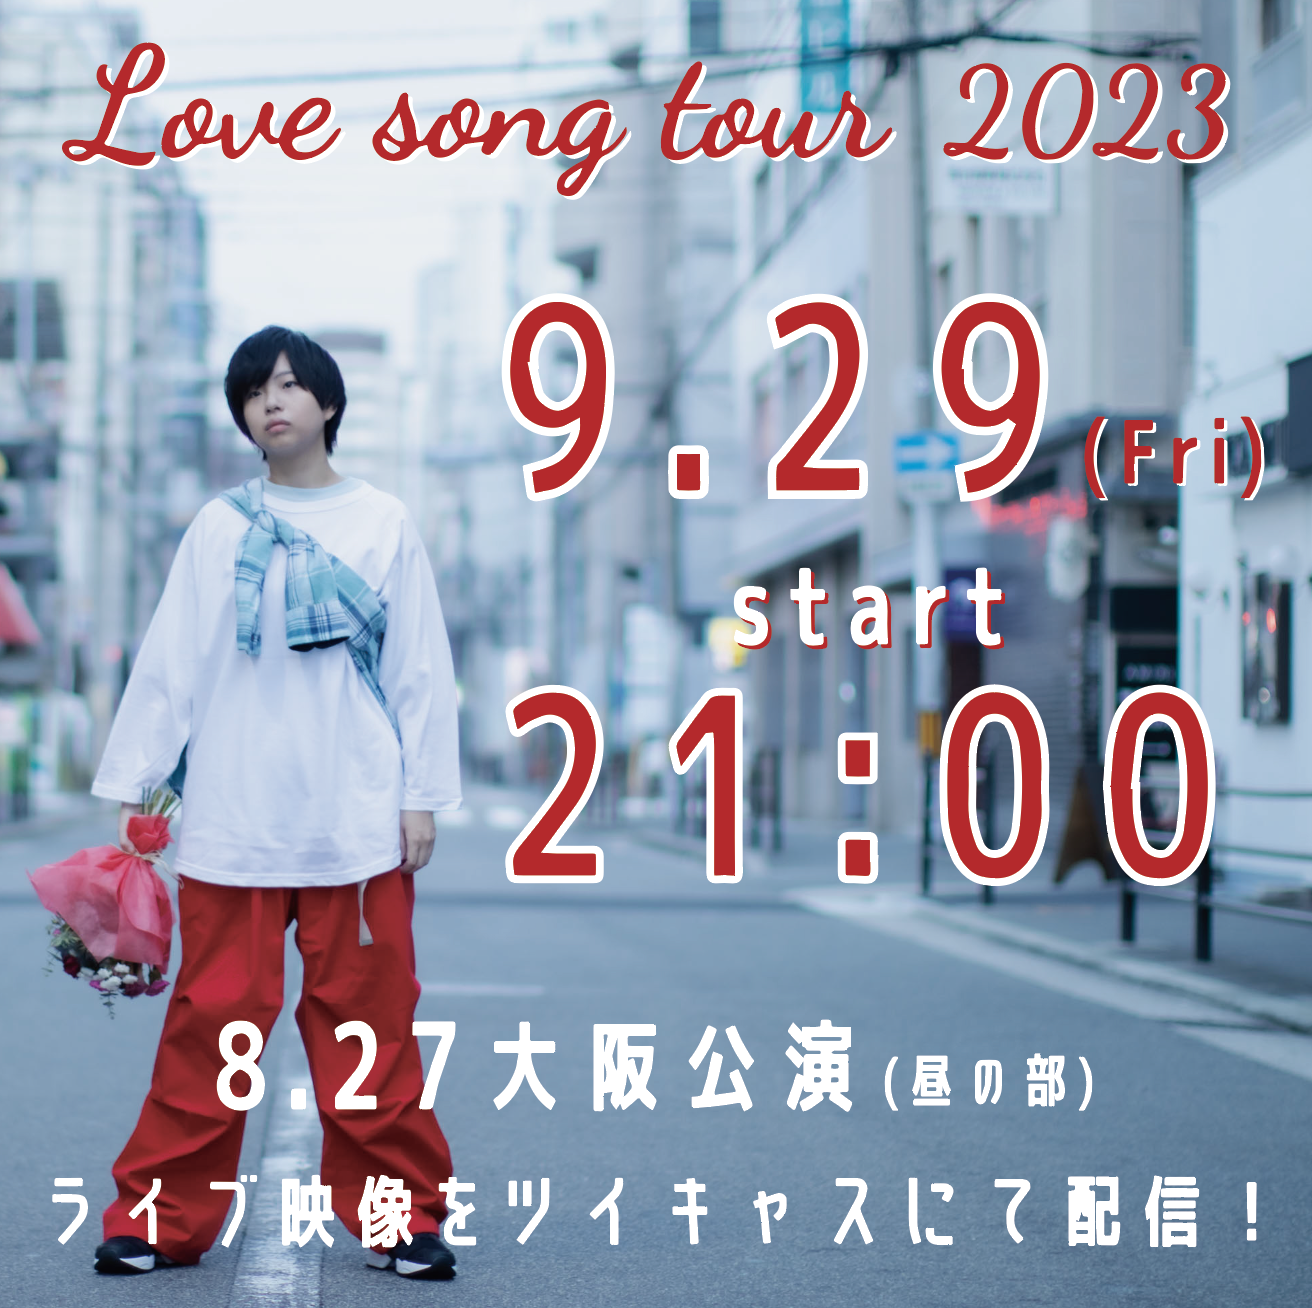 「Love song tour 2023」配信ライブ